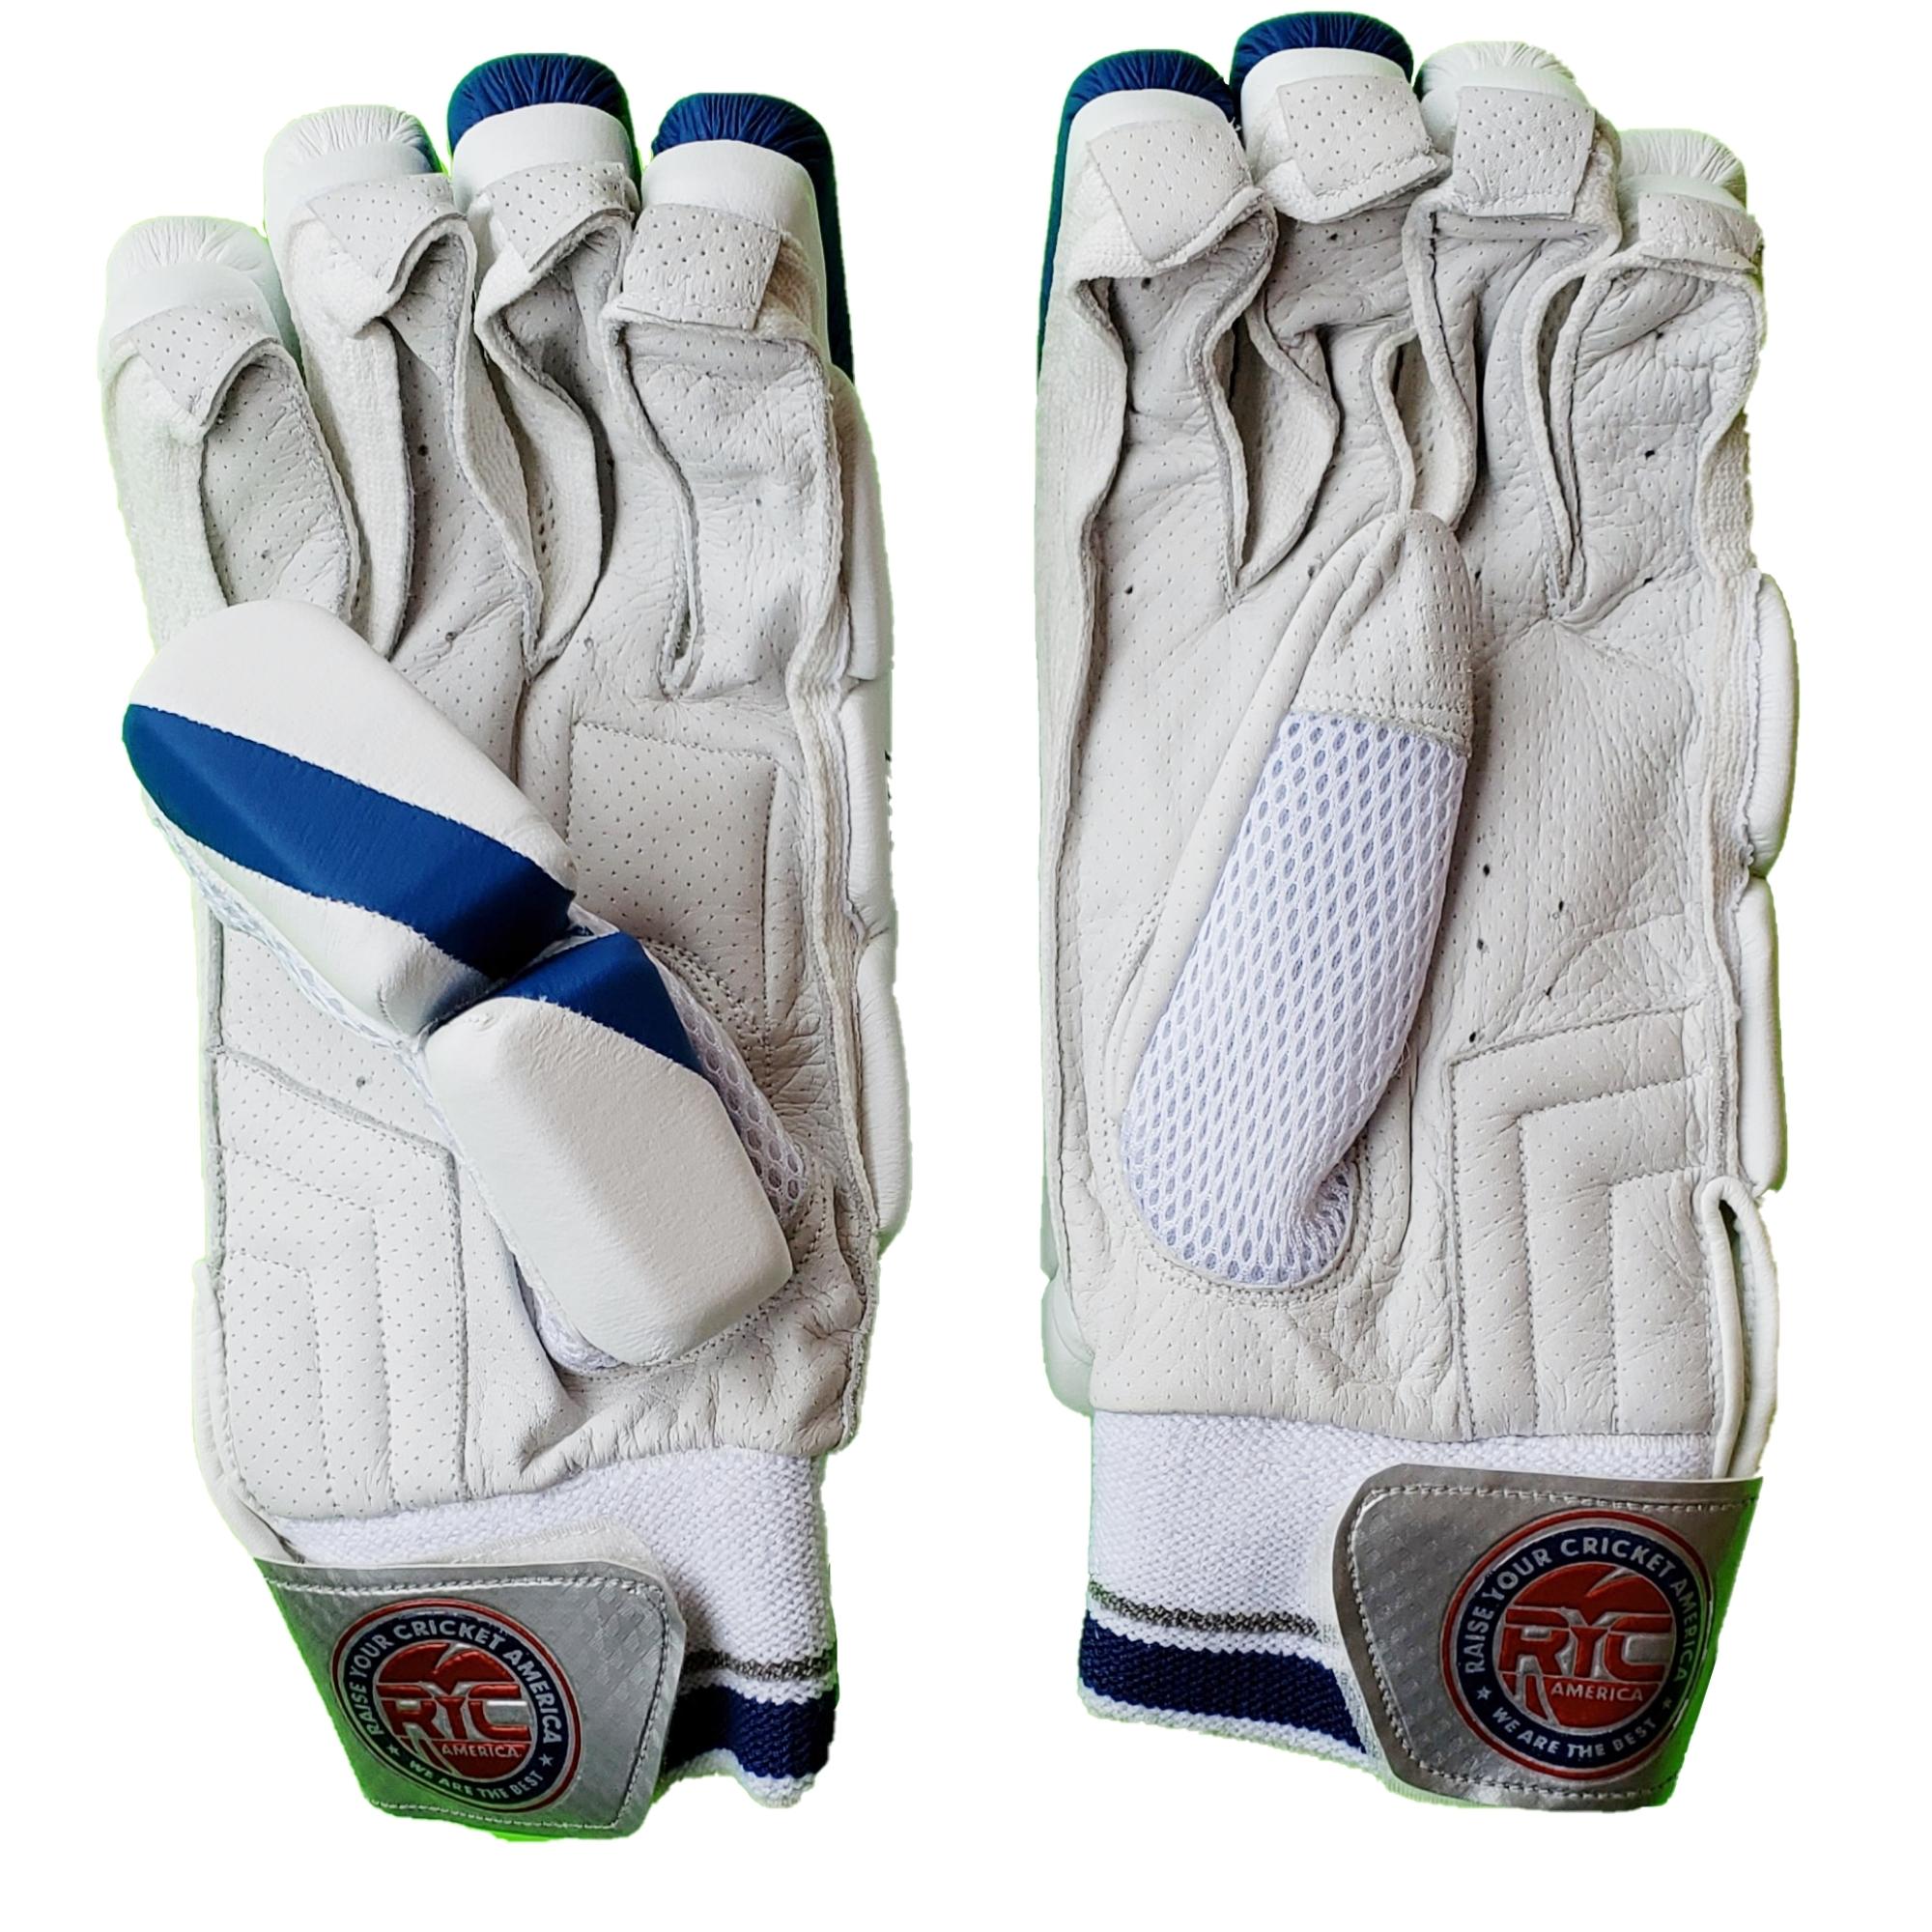 Zee Sports RYC Cricket Batting Gloves Player Edition Blue Golden